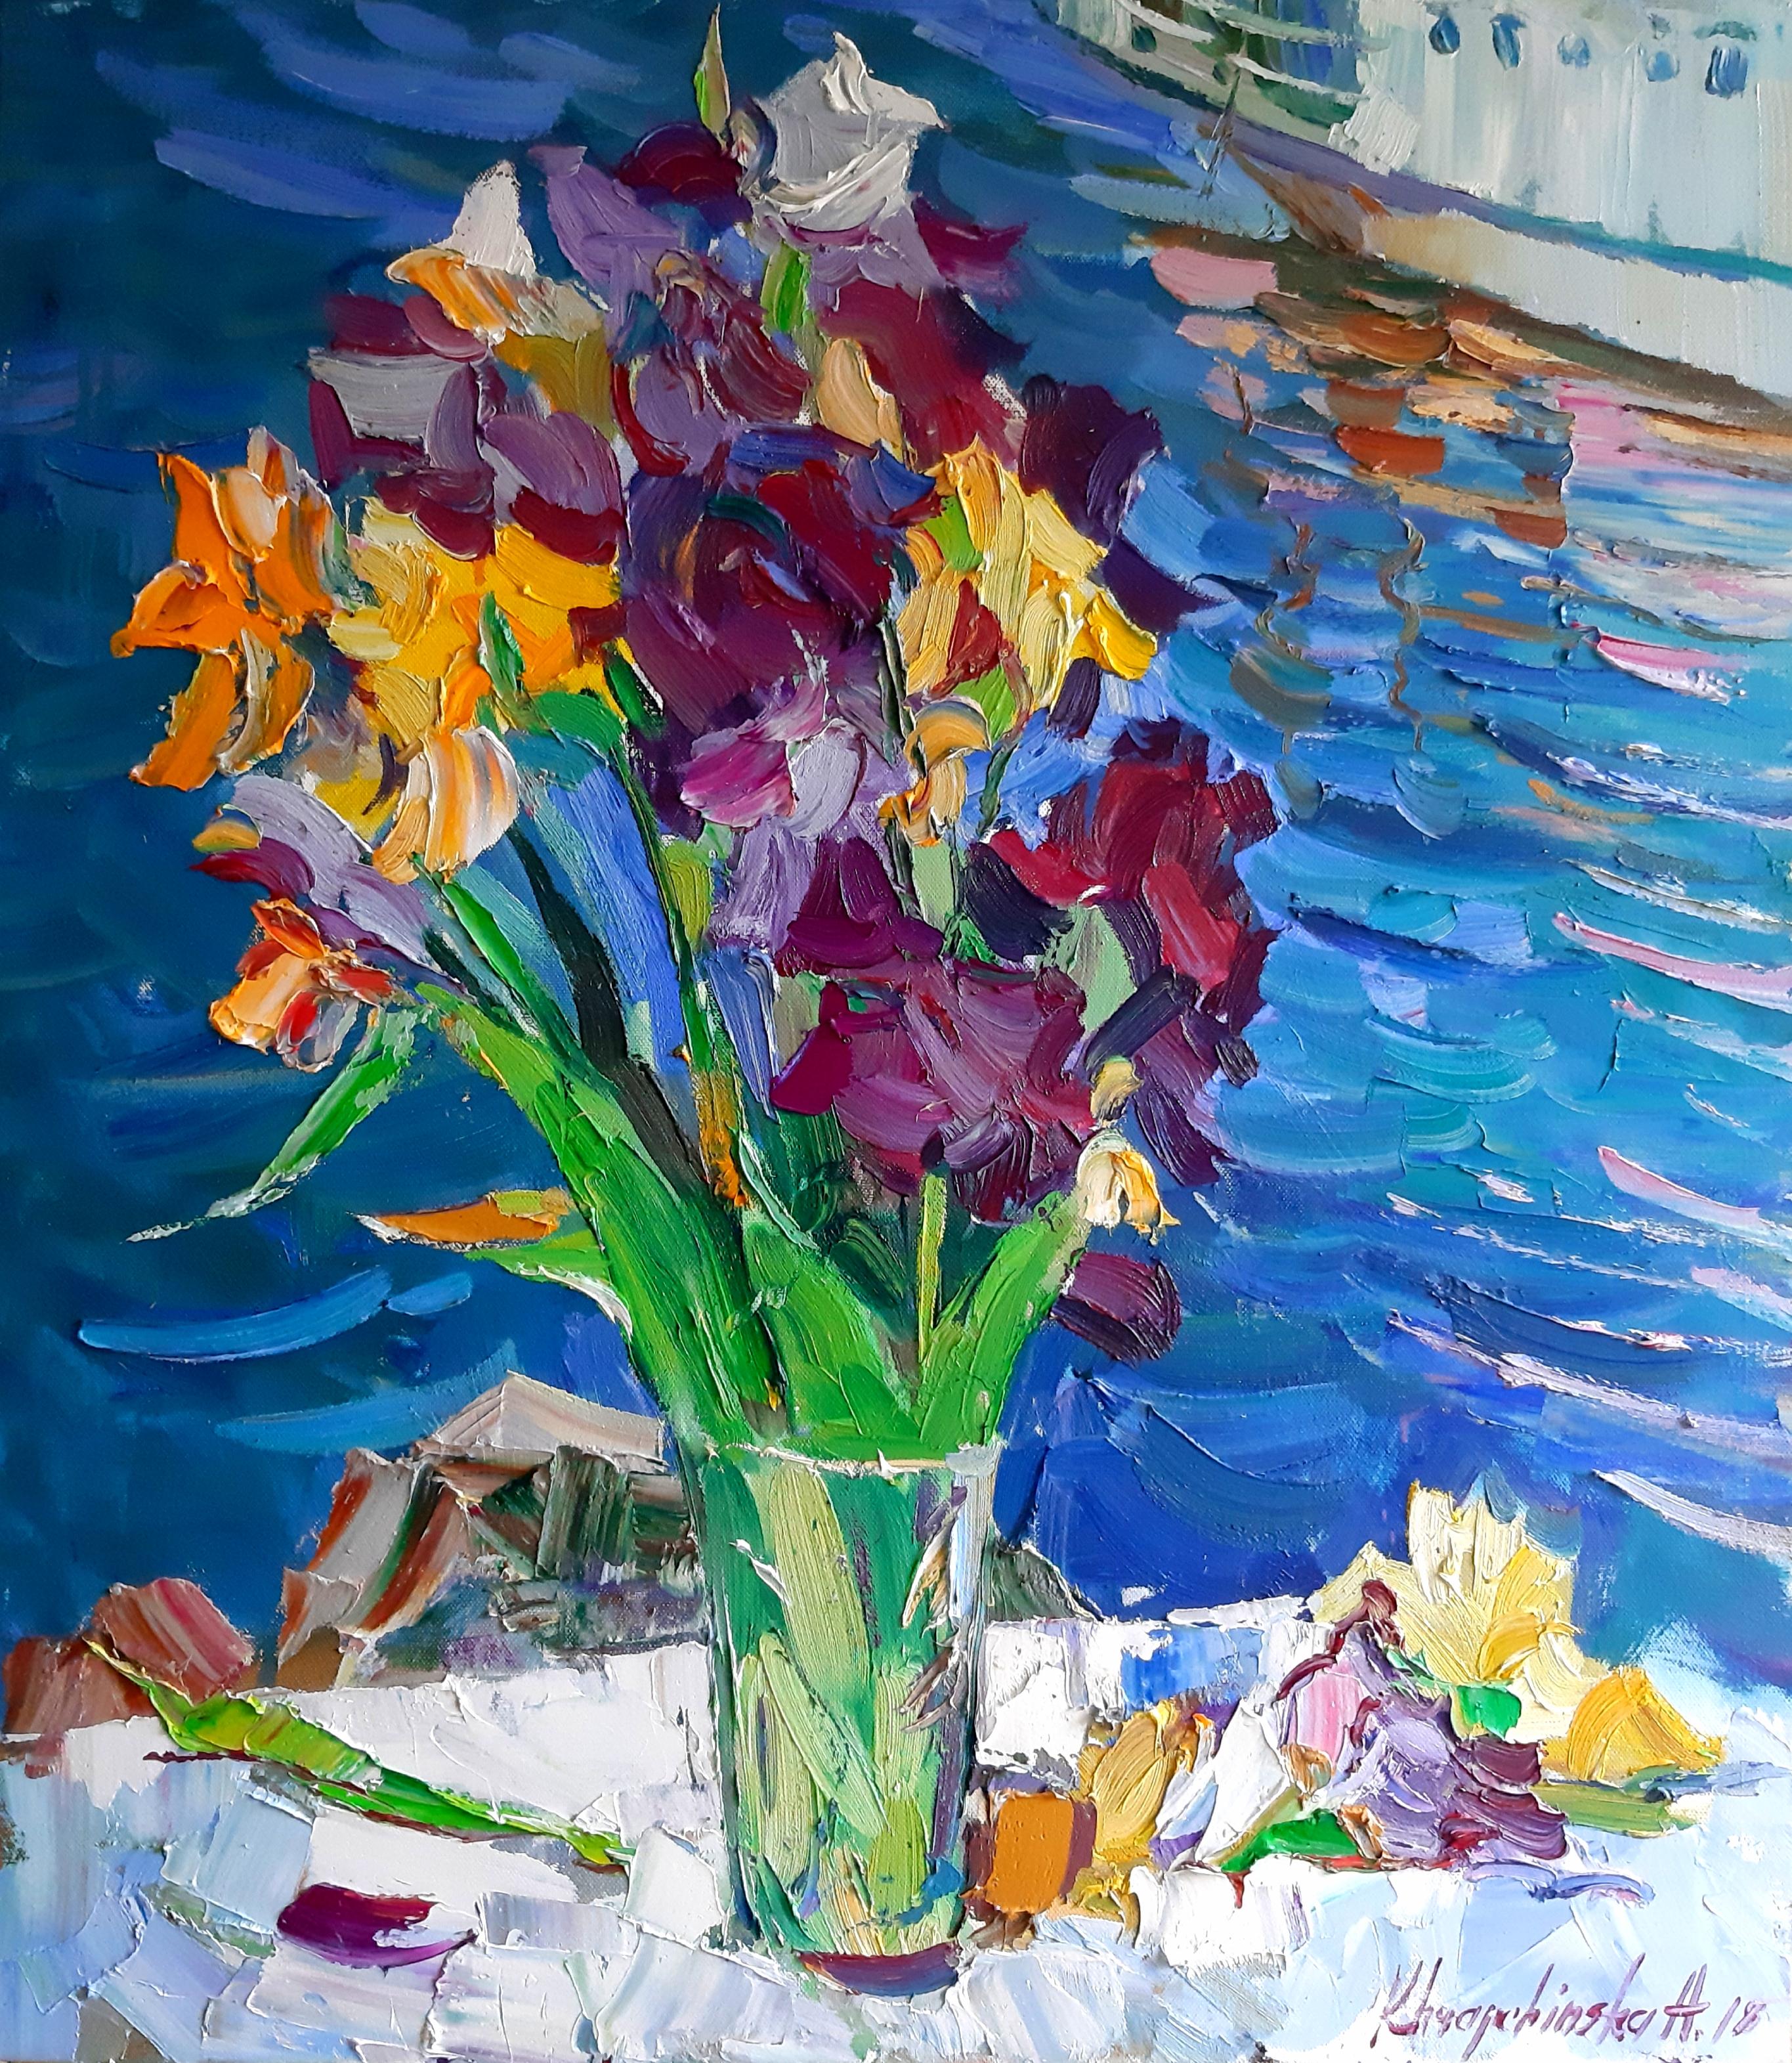 Alina Khrapchynska Landscape Painting - Nikolaevsky Yachting Club Flowers -Landscape Still Life Oil Painting Blue Orange